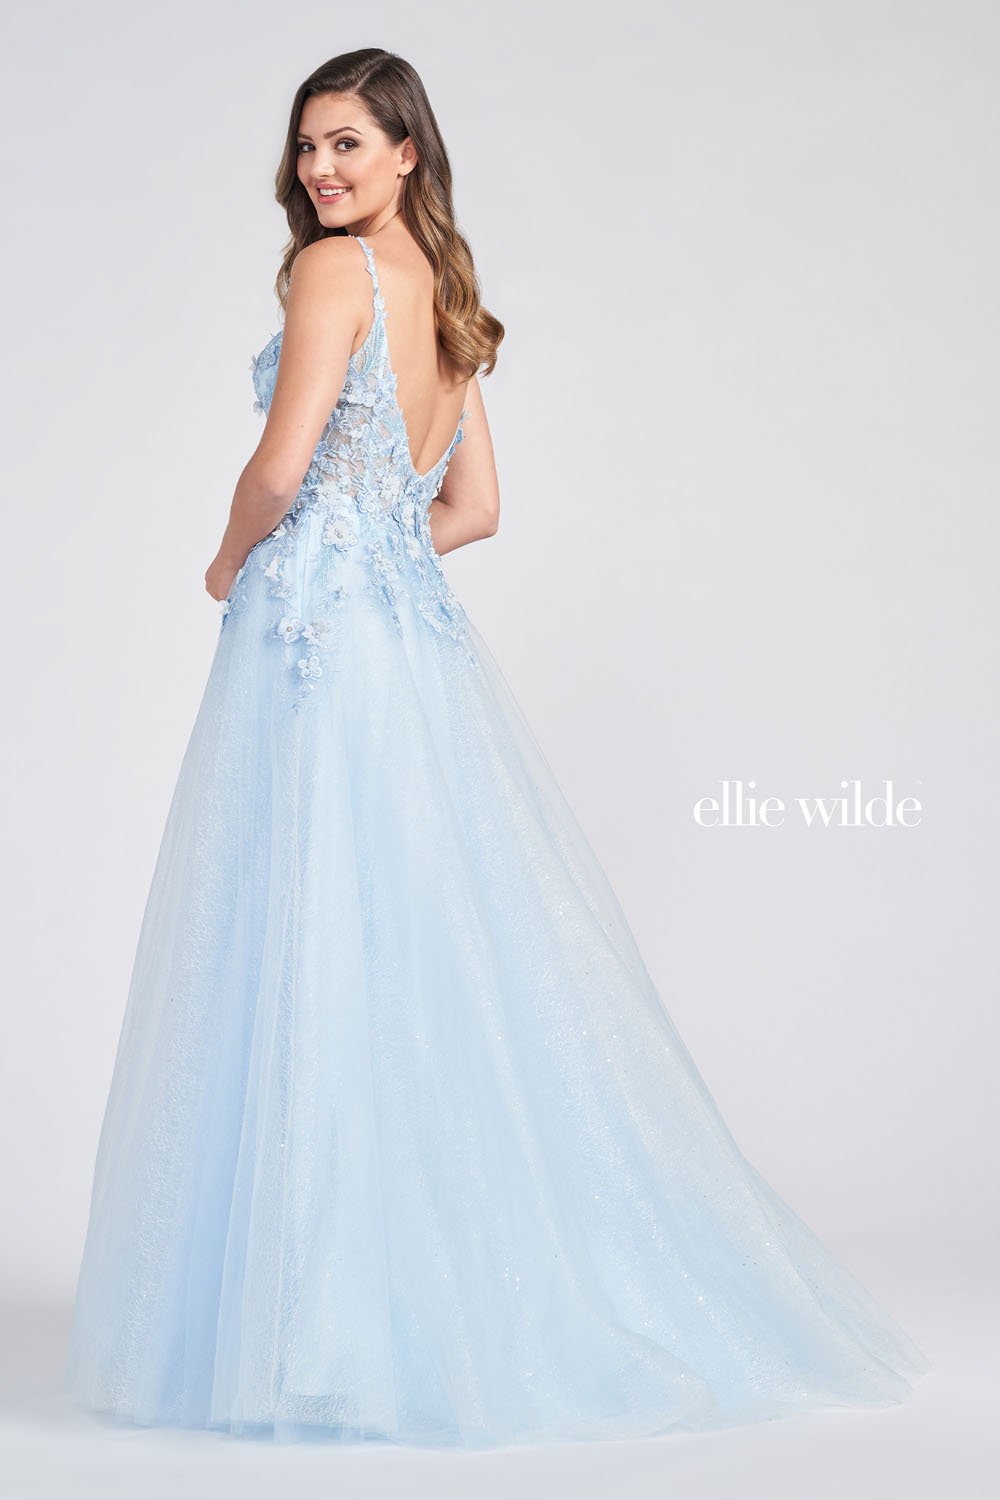 Ellie Wilde Light Blue EW122057 Prom Dress Image.  Light Blue formal dress.